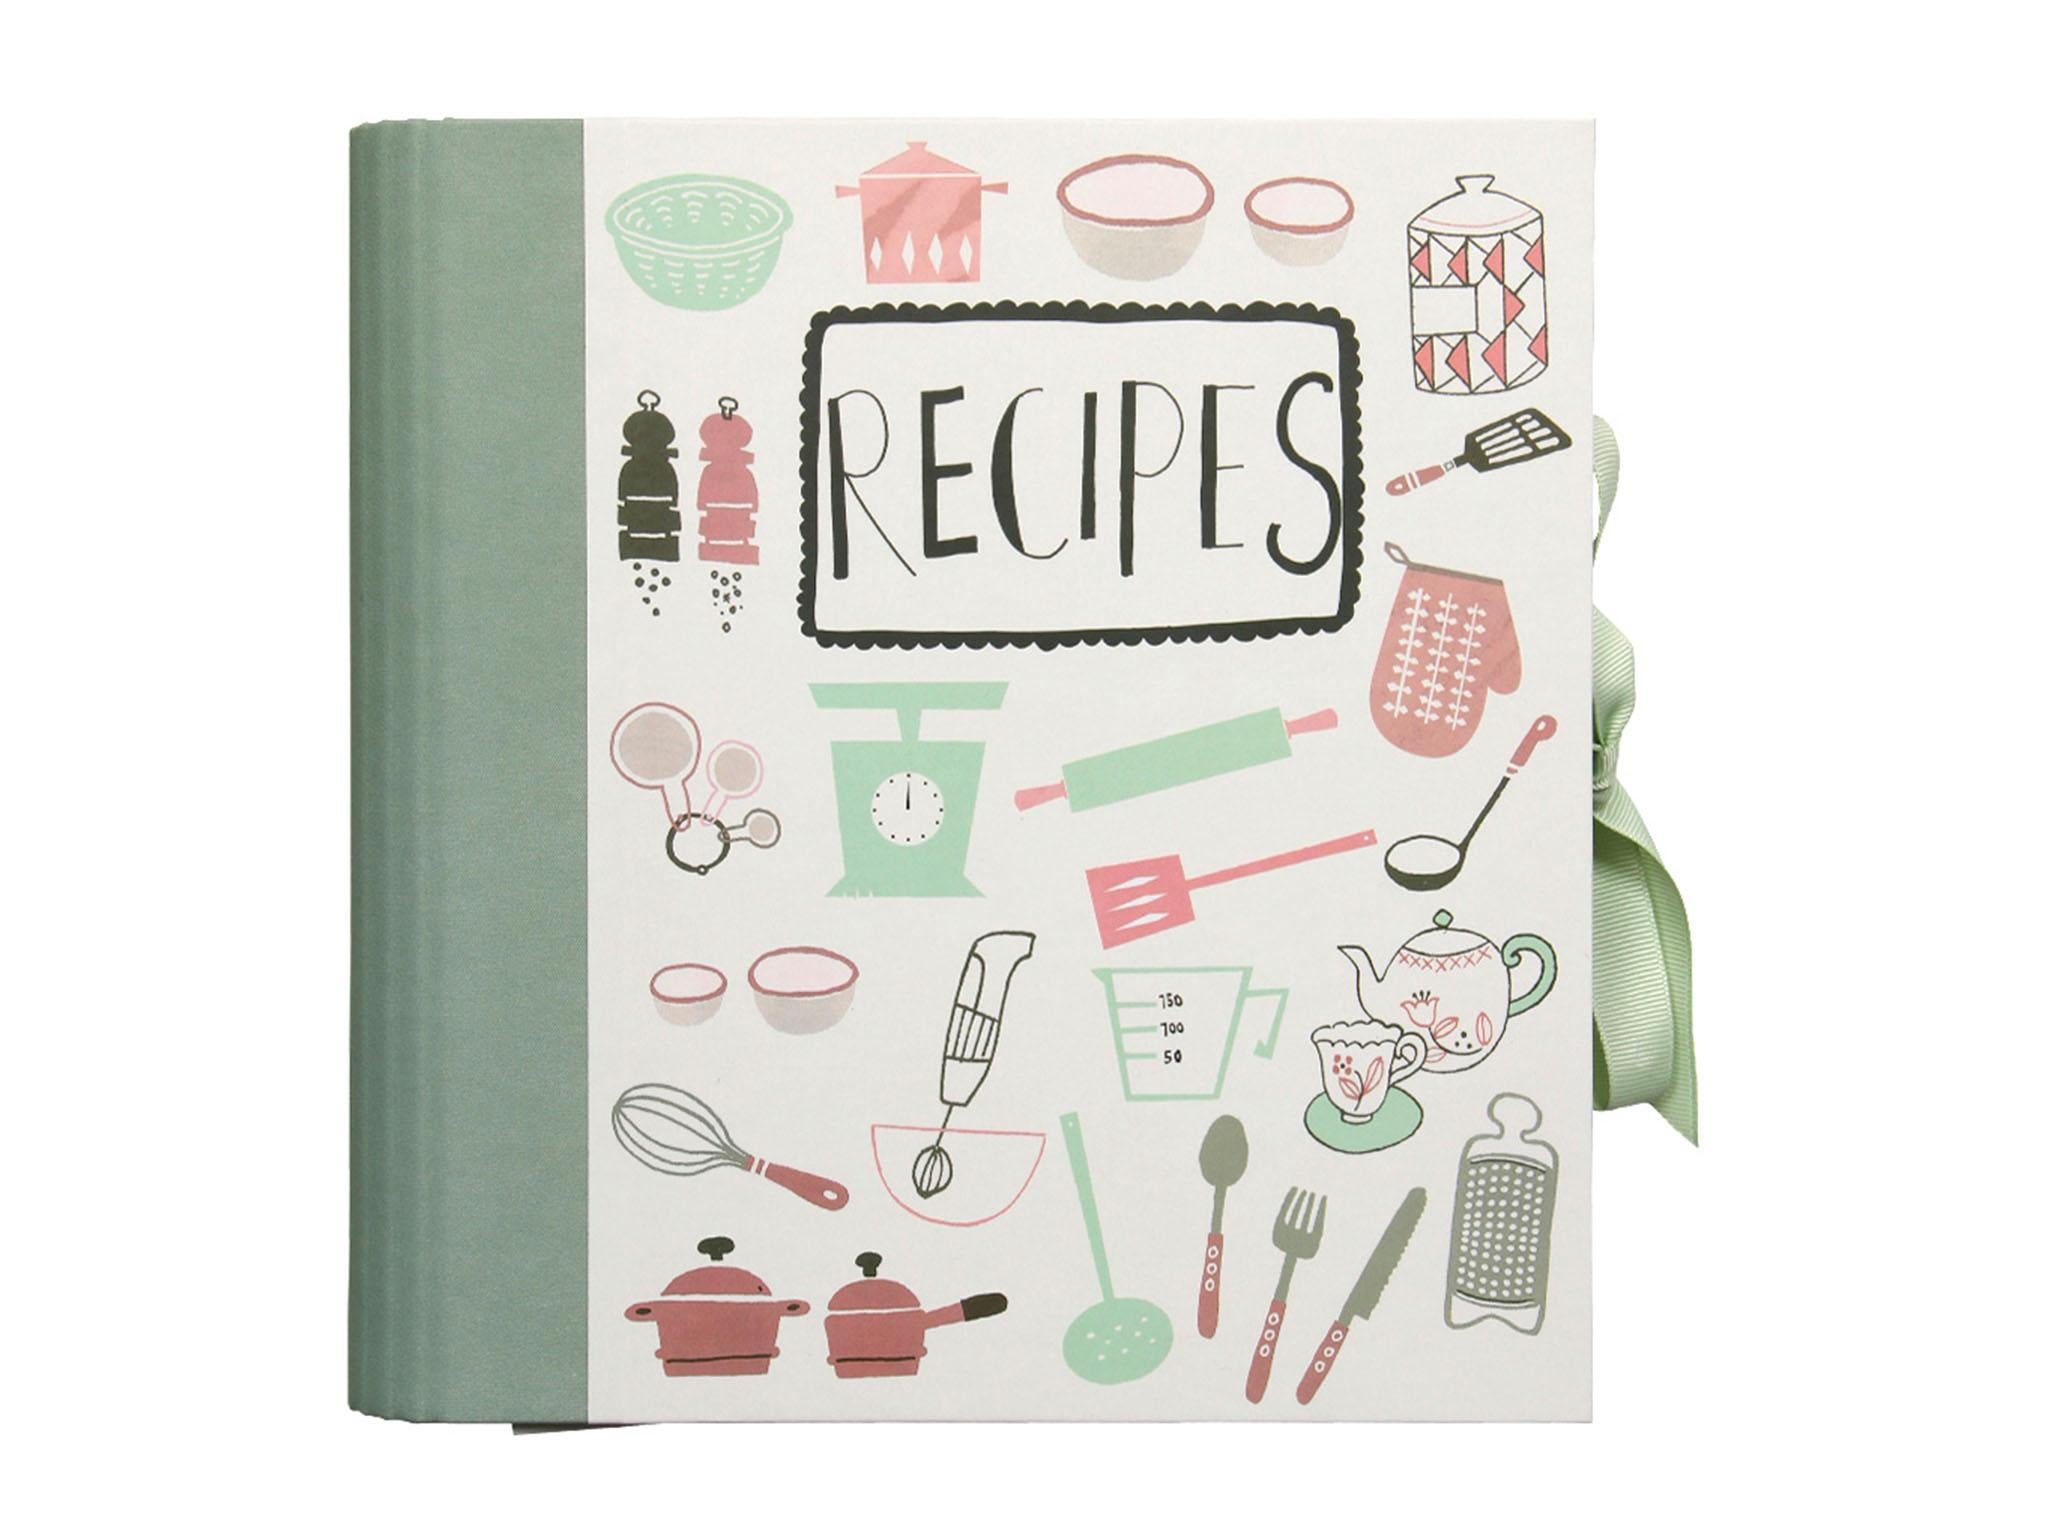 Blank Recipe Book: Empty Blank Food Recipe Book Cookbook to Write